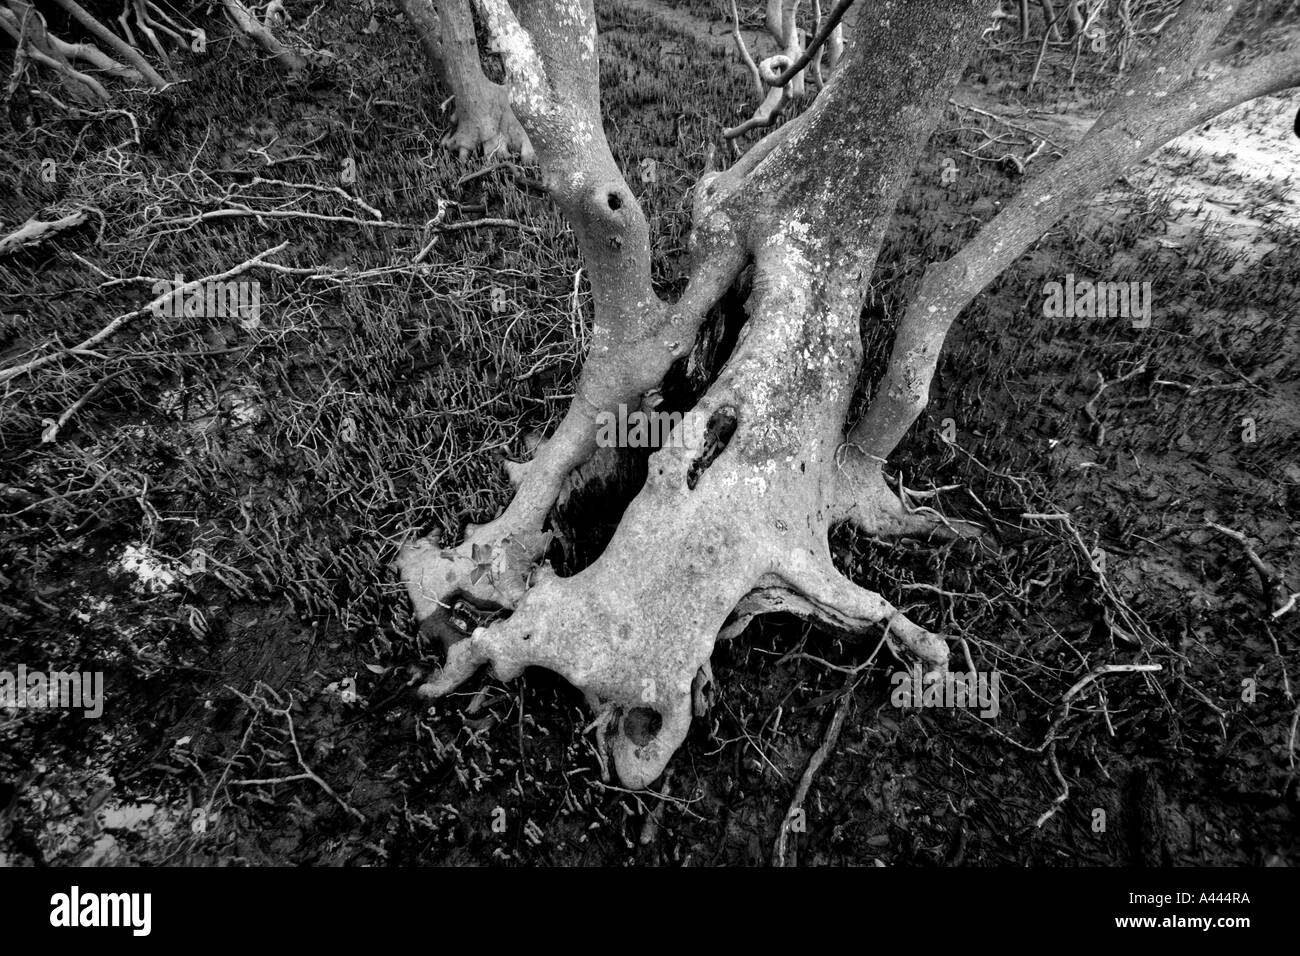 TREE ROOTS MANGROVE SWAMP HORIZONTAL BAPDB4982 Stock Photo